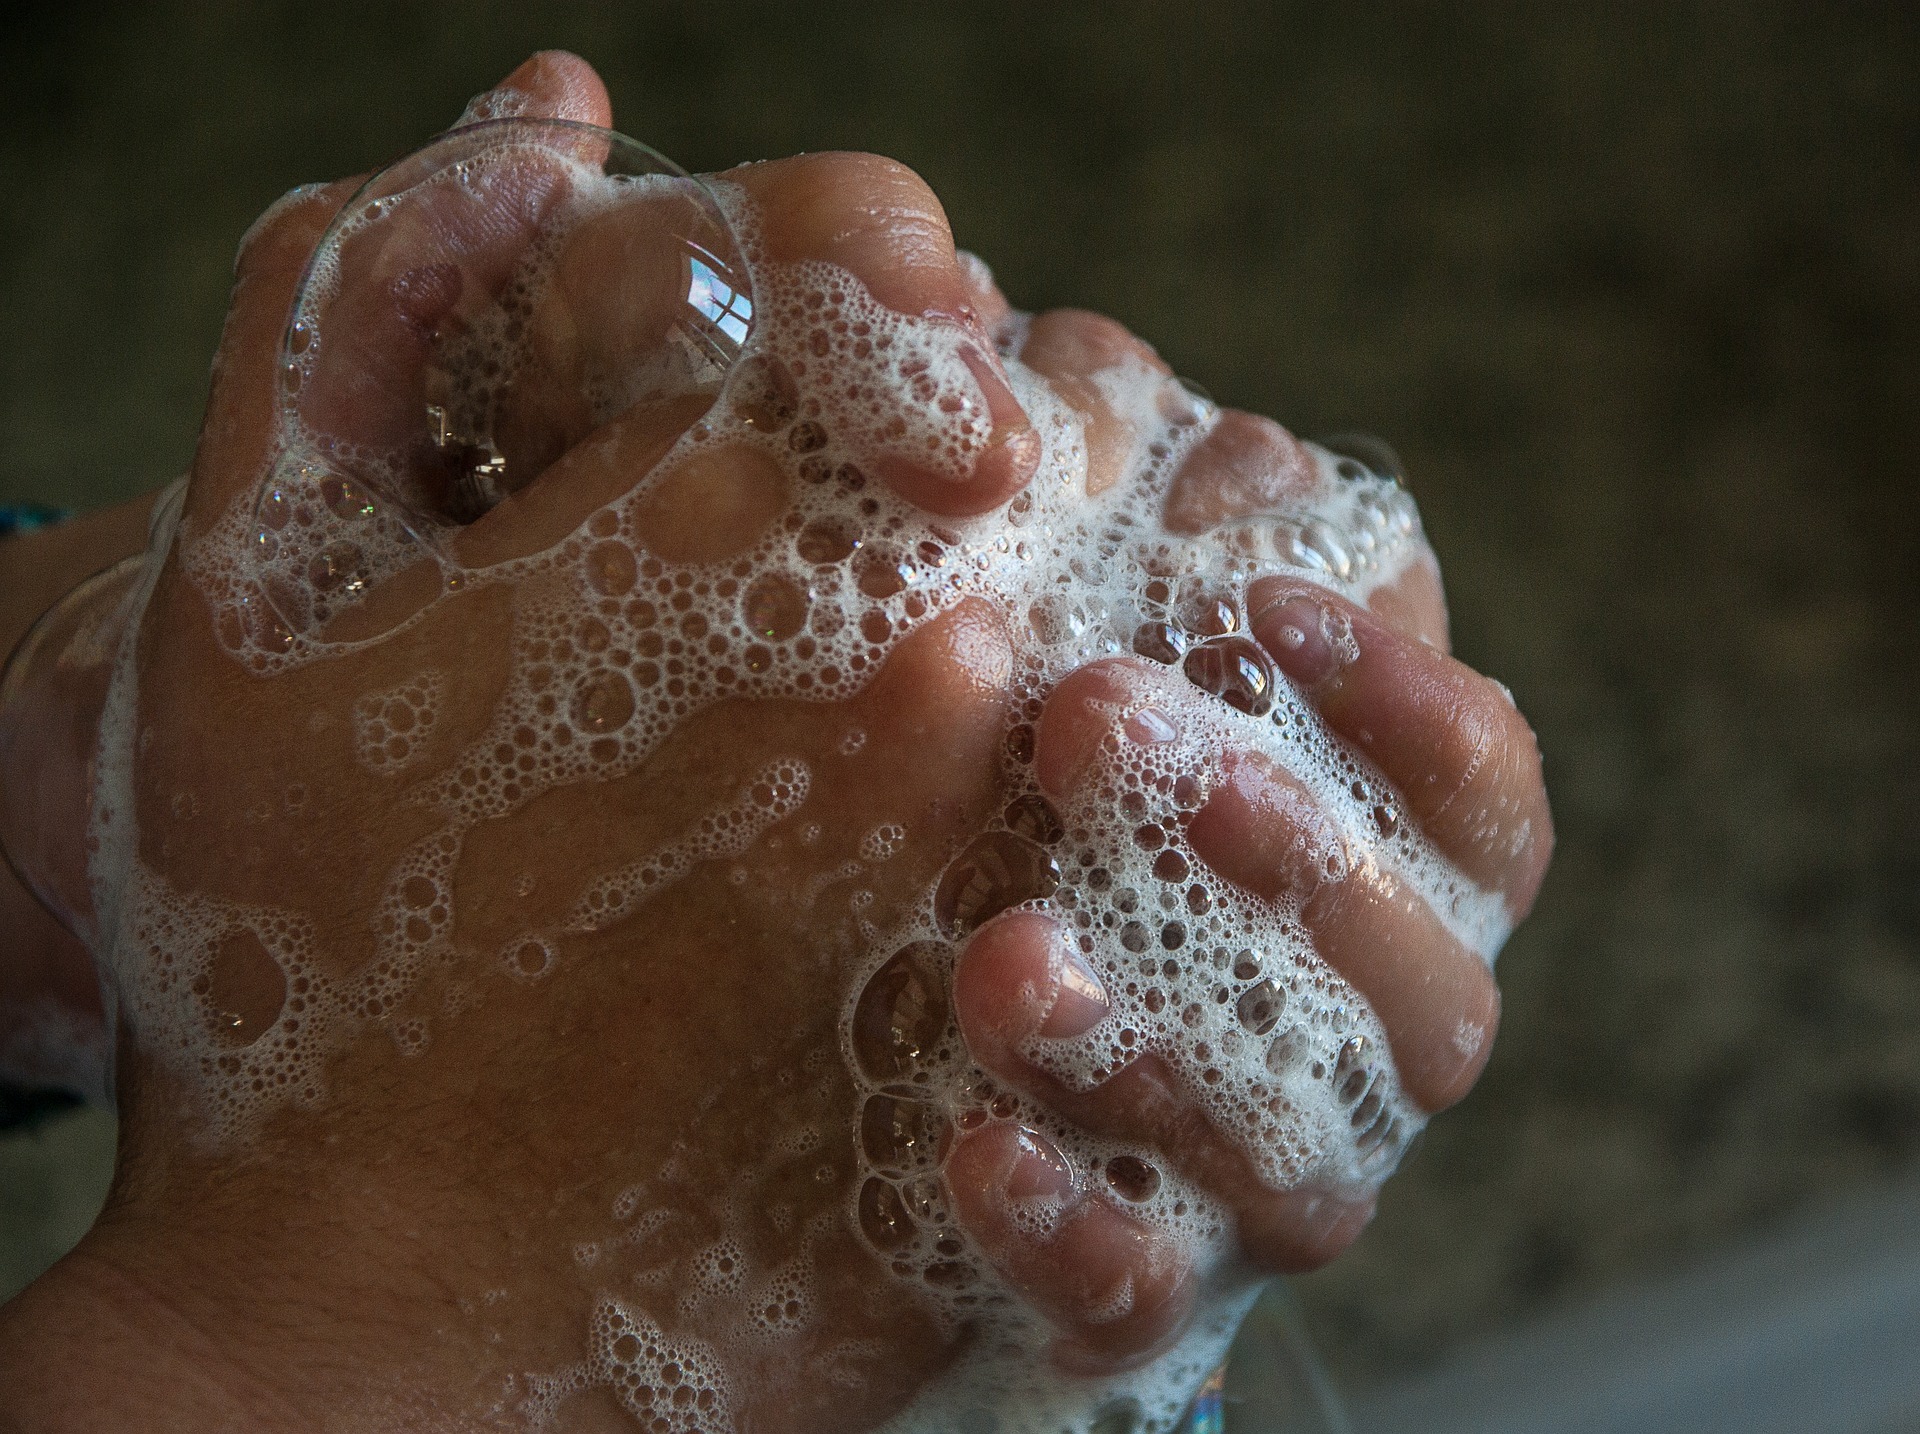 hygiene hands pb jackmac34